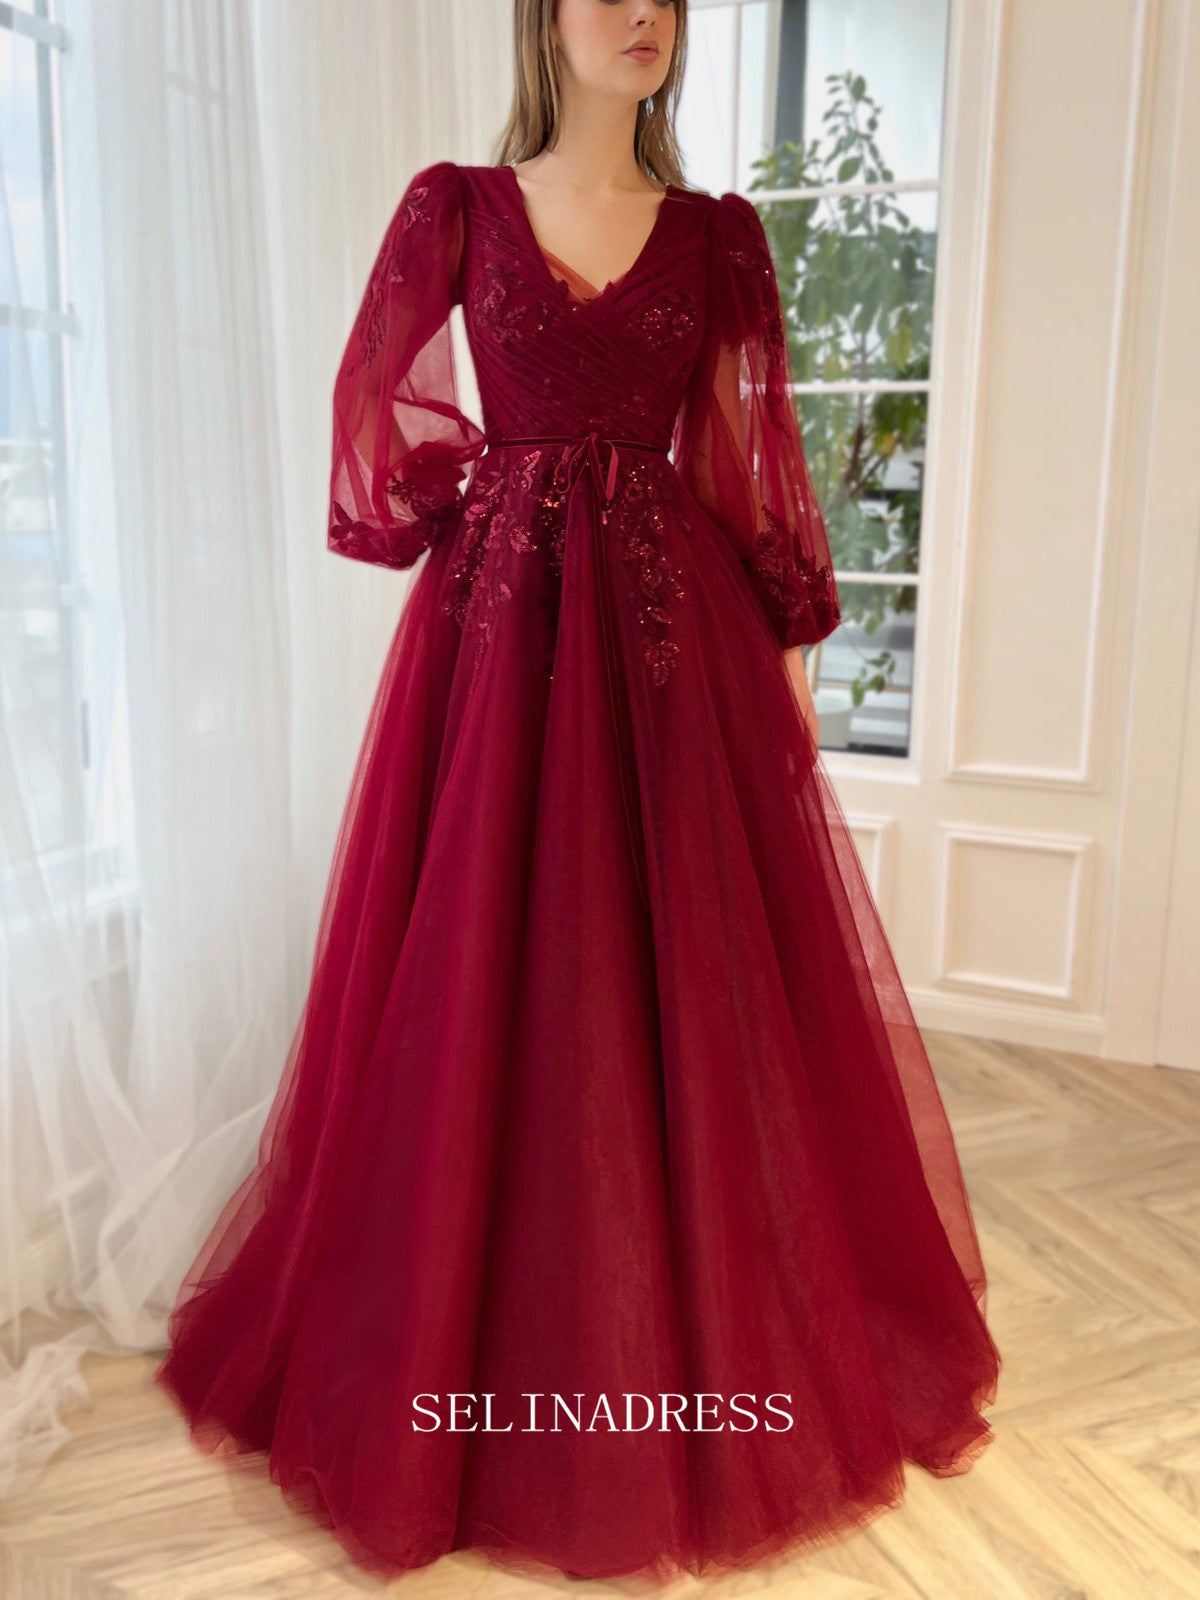 Double Straps Long Burgundy Evening Dress with High Slit – FancyVestido